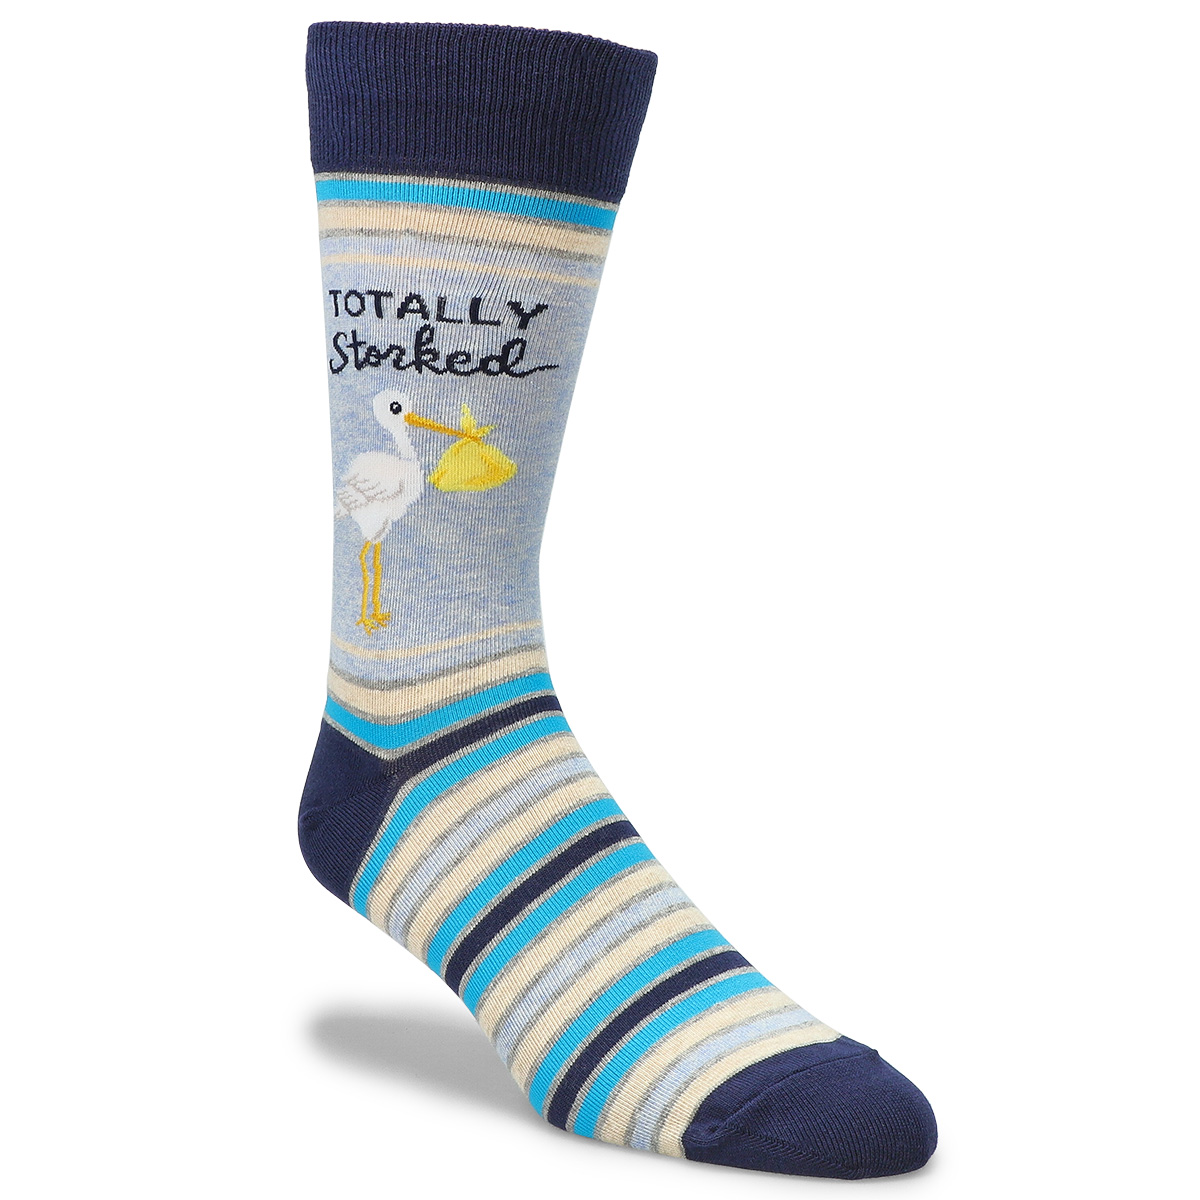 Men's Totally Storked Printed Sock - Navy